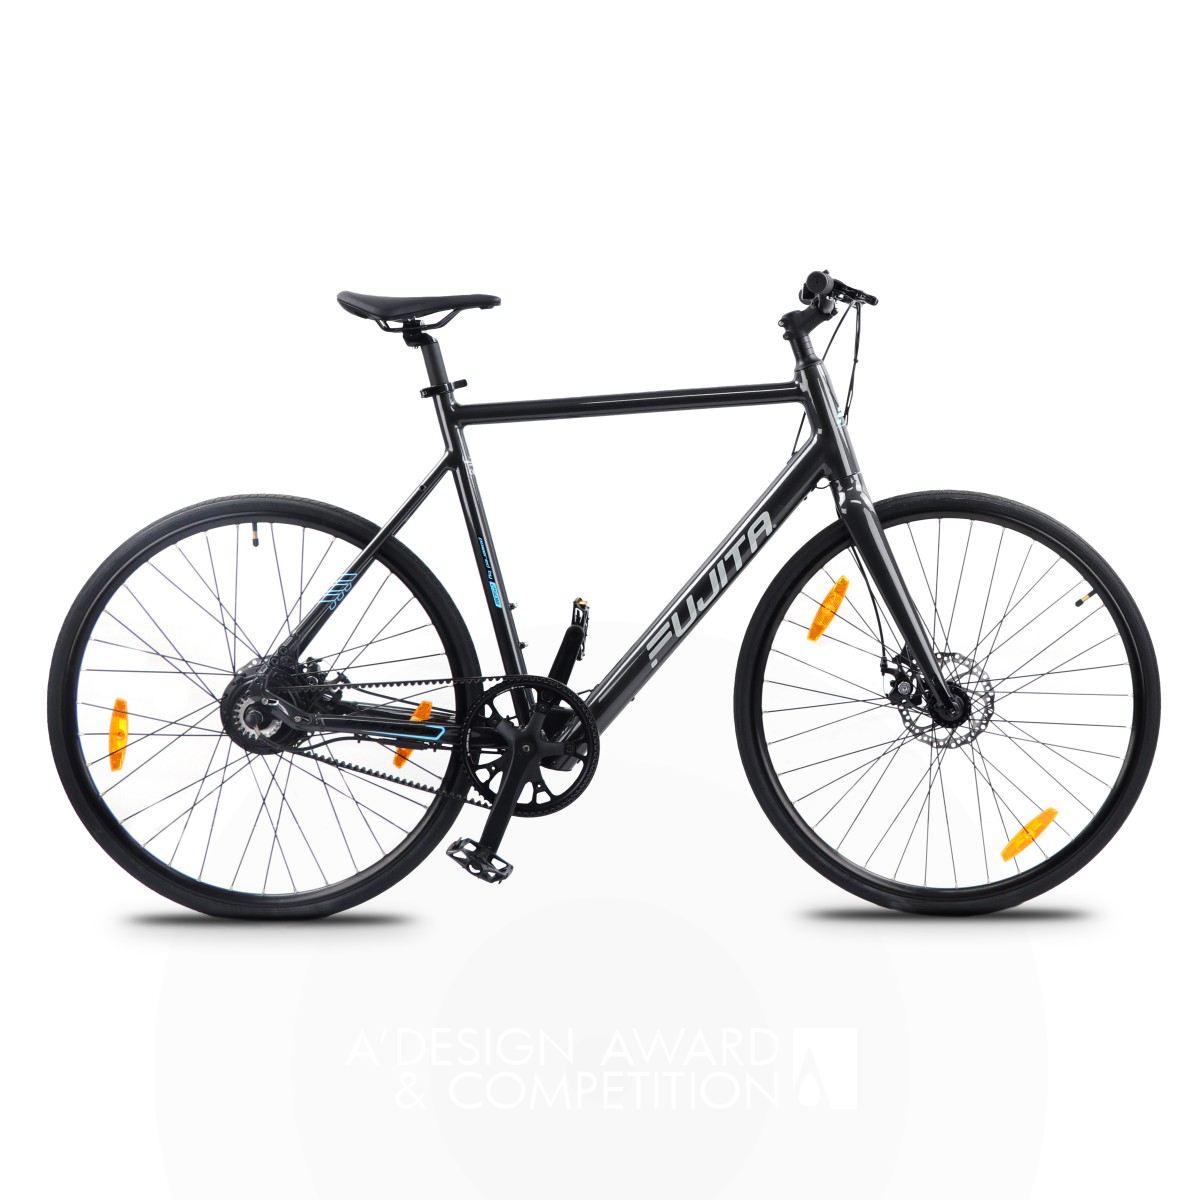 Fujita Urban Electric Bike by Linda Pang Silver Bicycle Design Award Winner 2023 